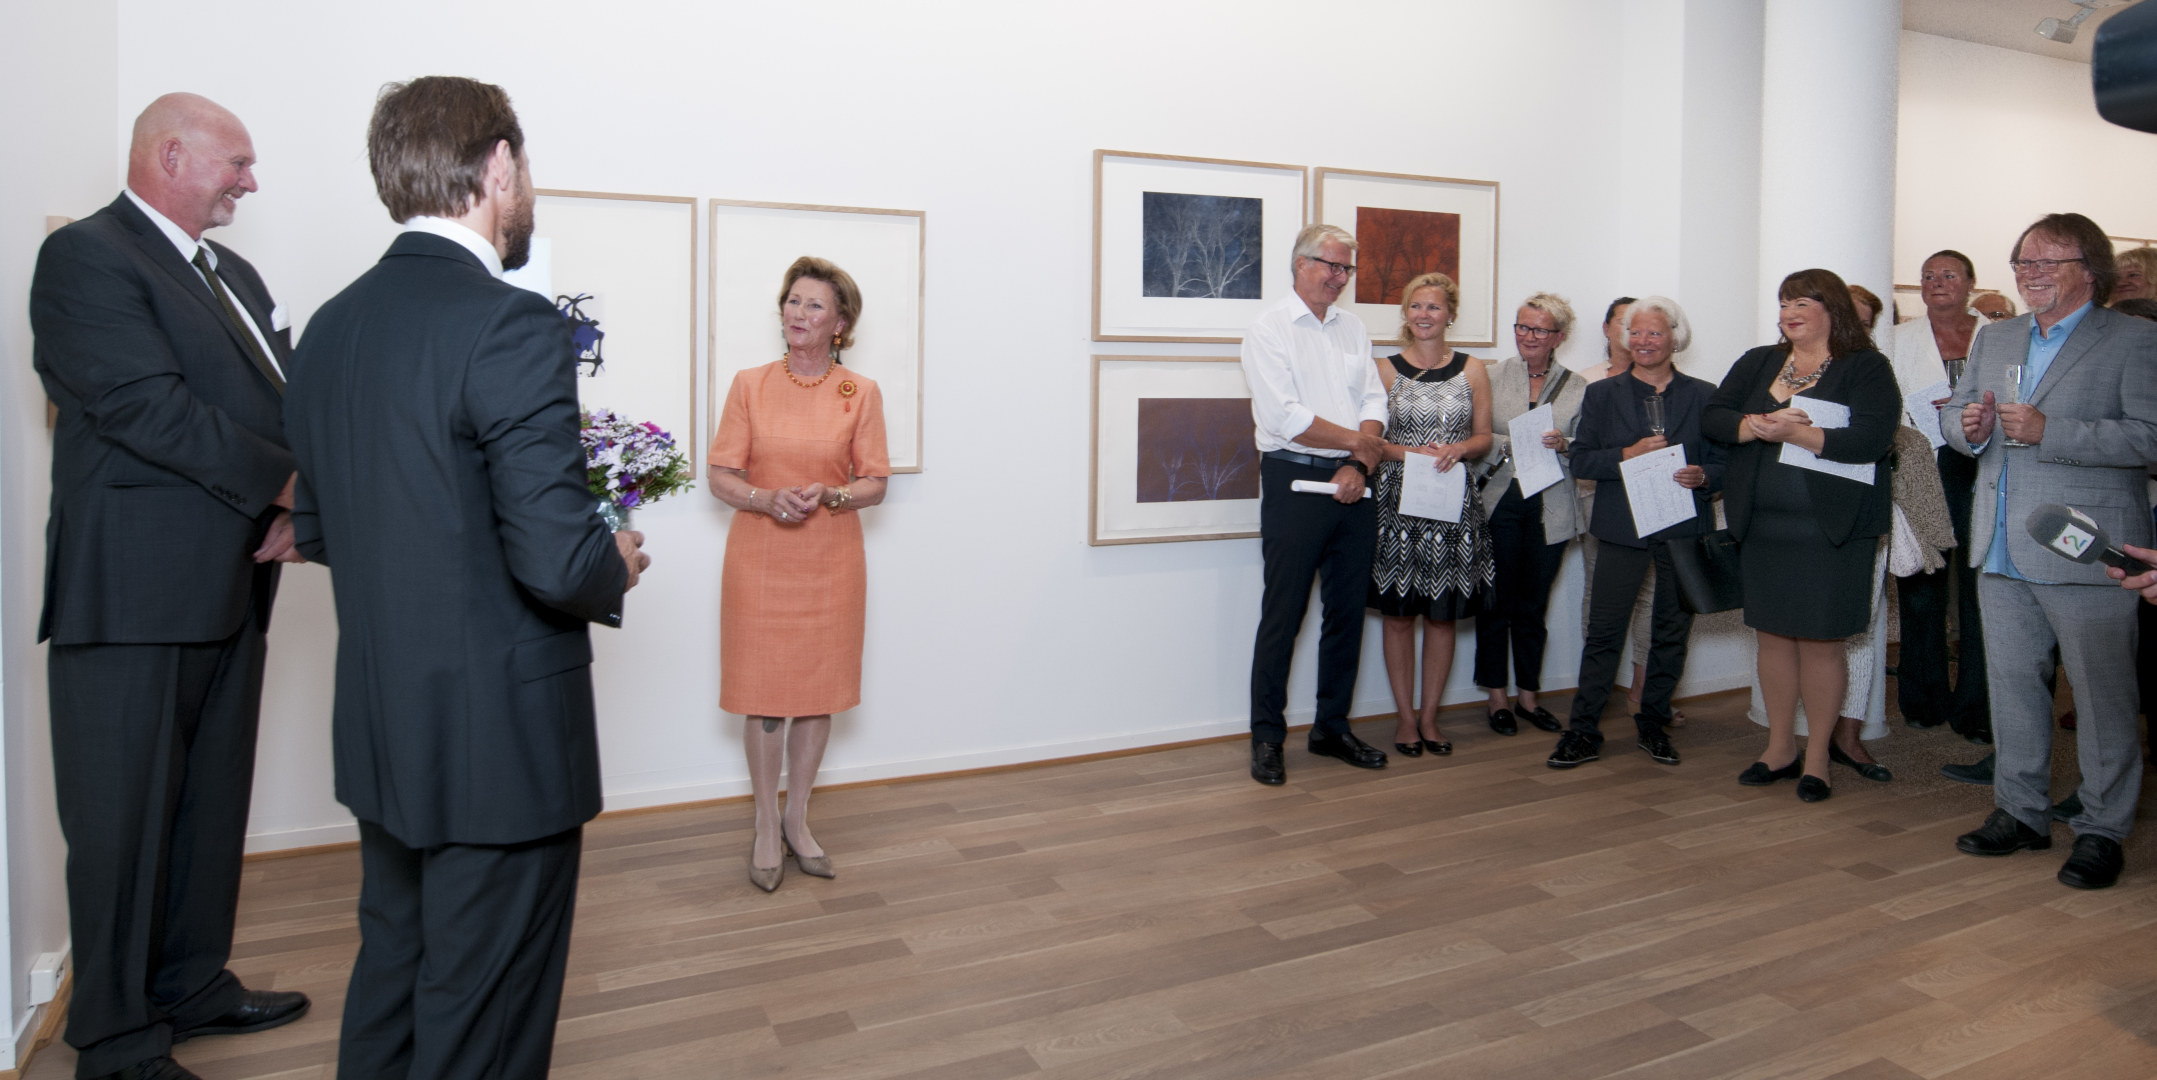 Kunstverket_2 Opening of exhibition HM Dronning Sonja_Kunstverket Galleri Aug 2015_Photo Morten Brun